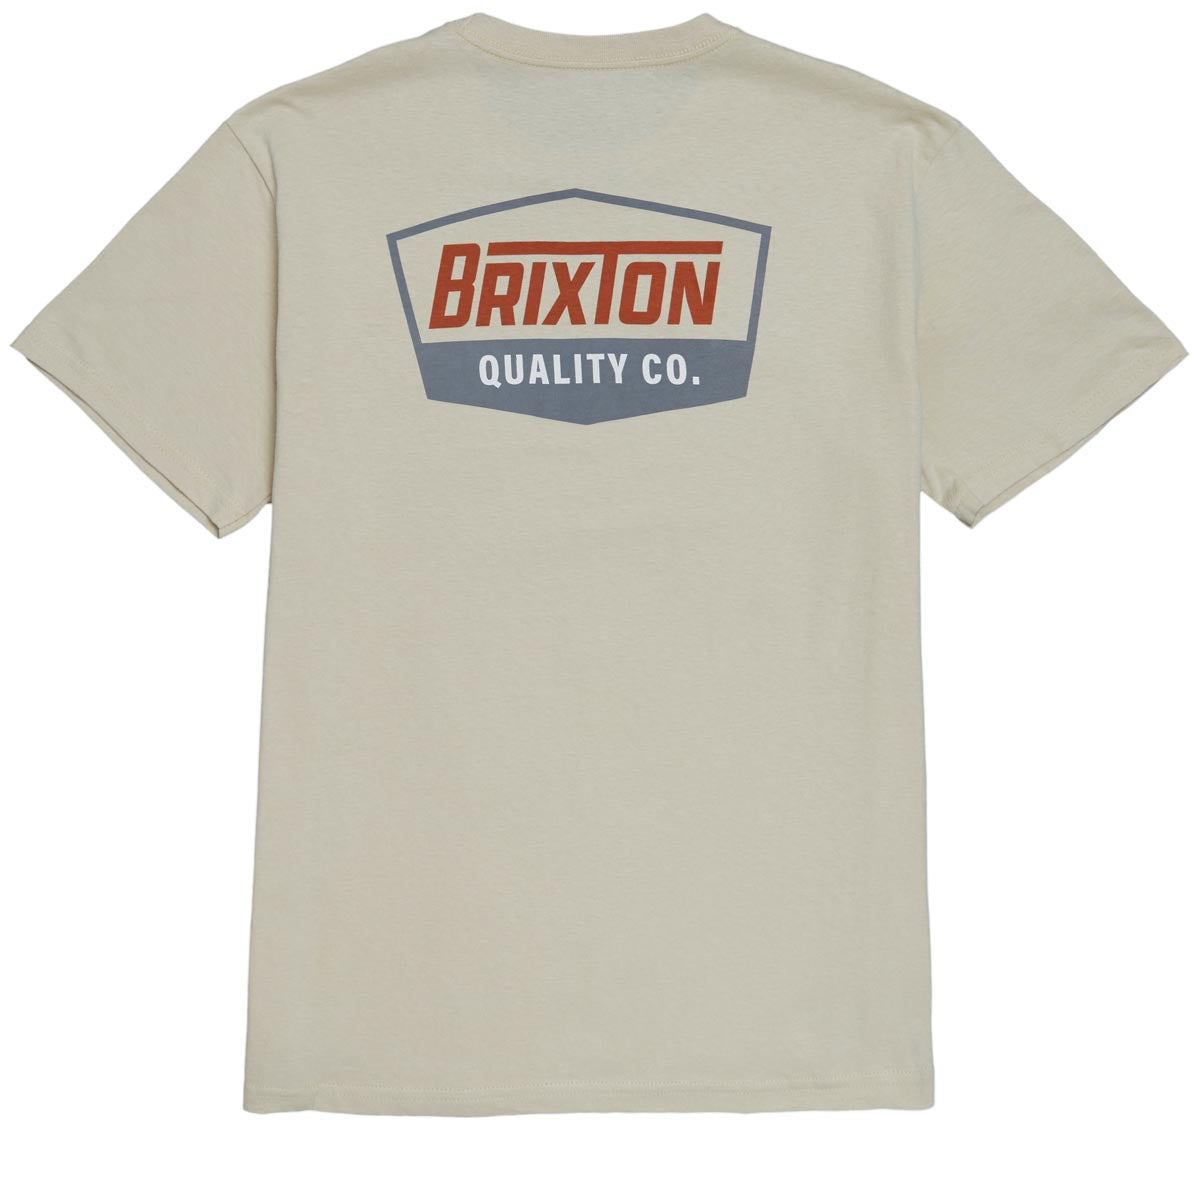 Brixton Regal T-Shirt - Cream/Barn Red image 2